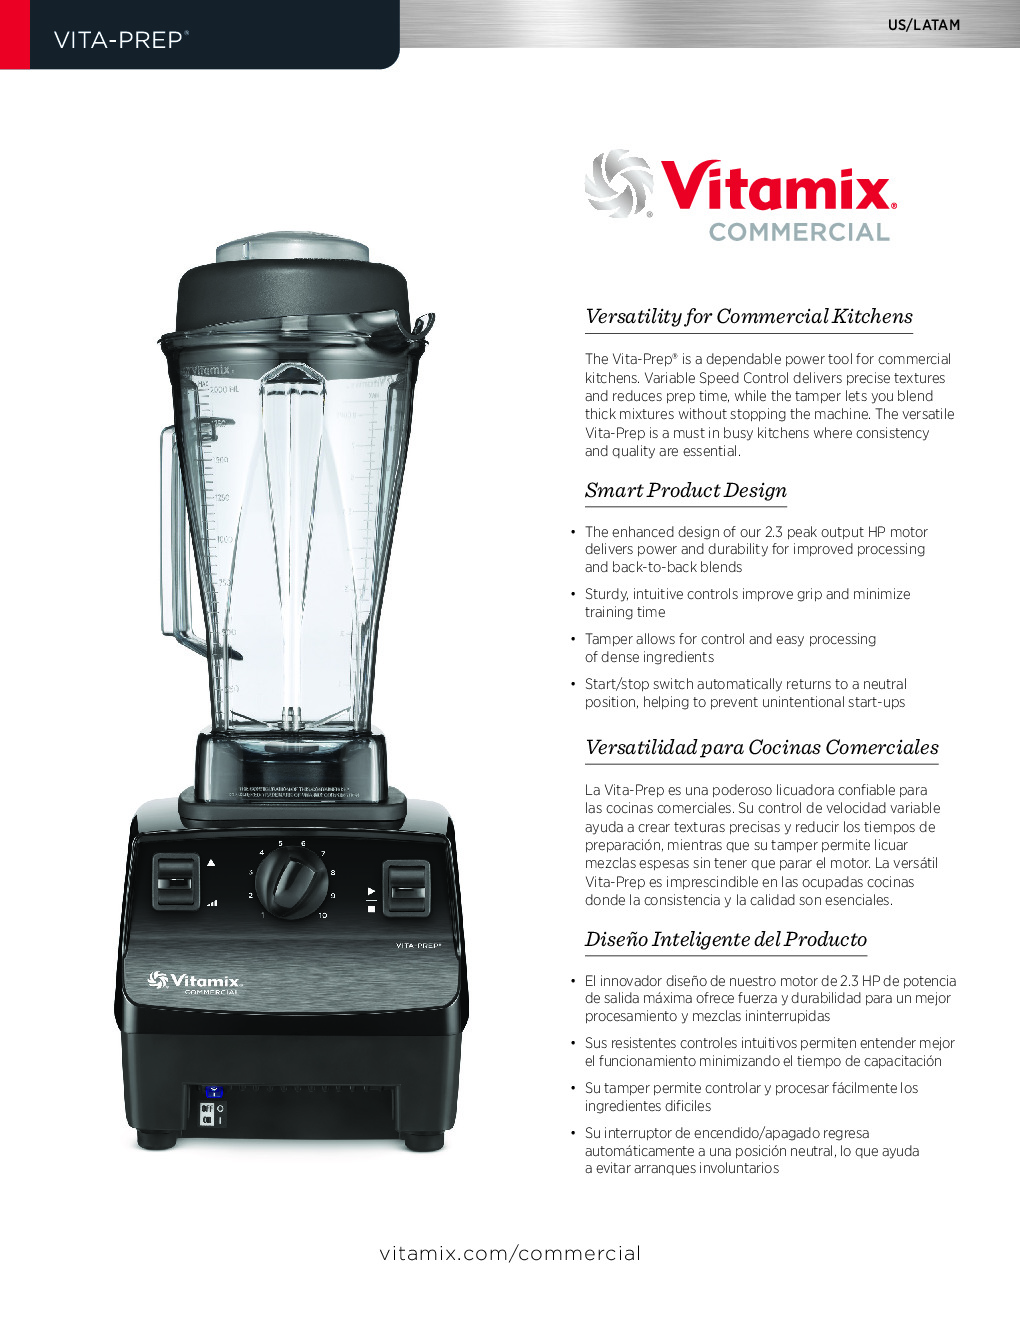 Vitamix 062827 Countertop Food Blender